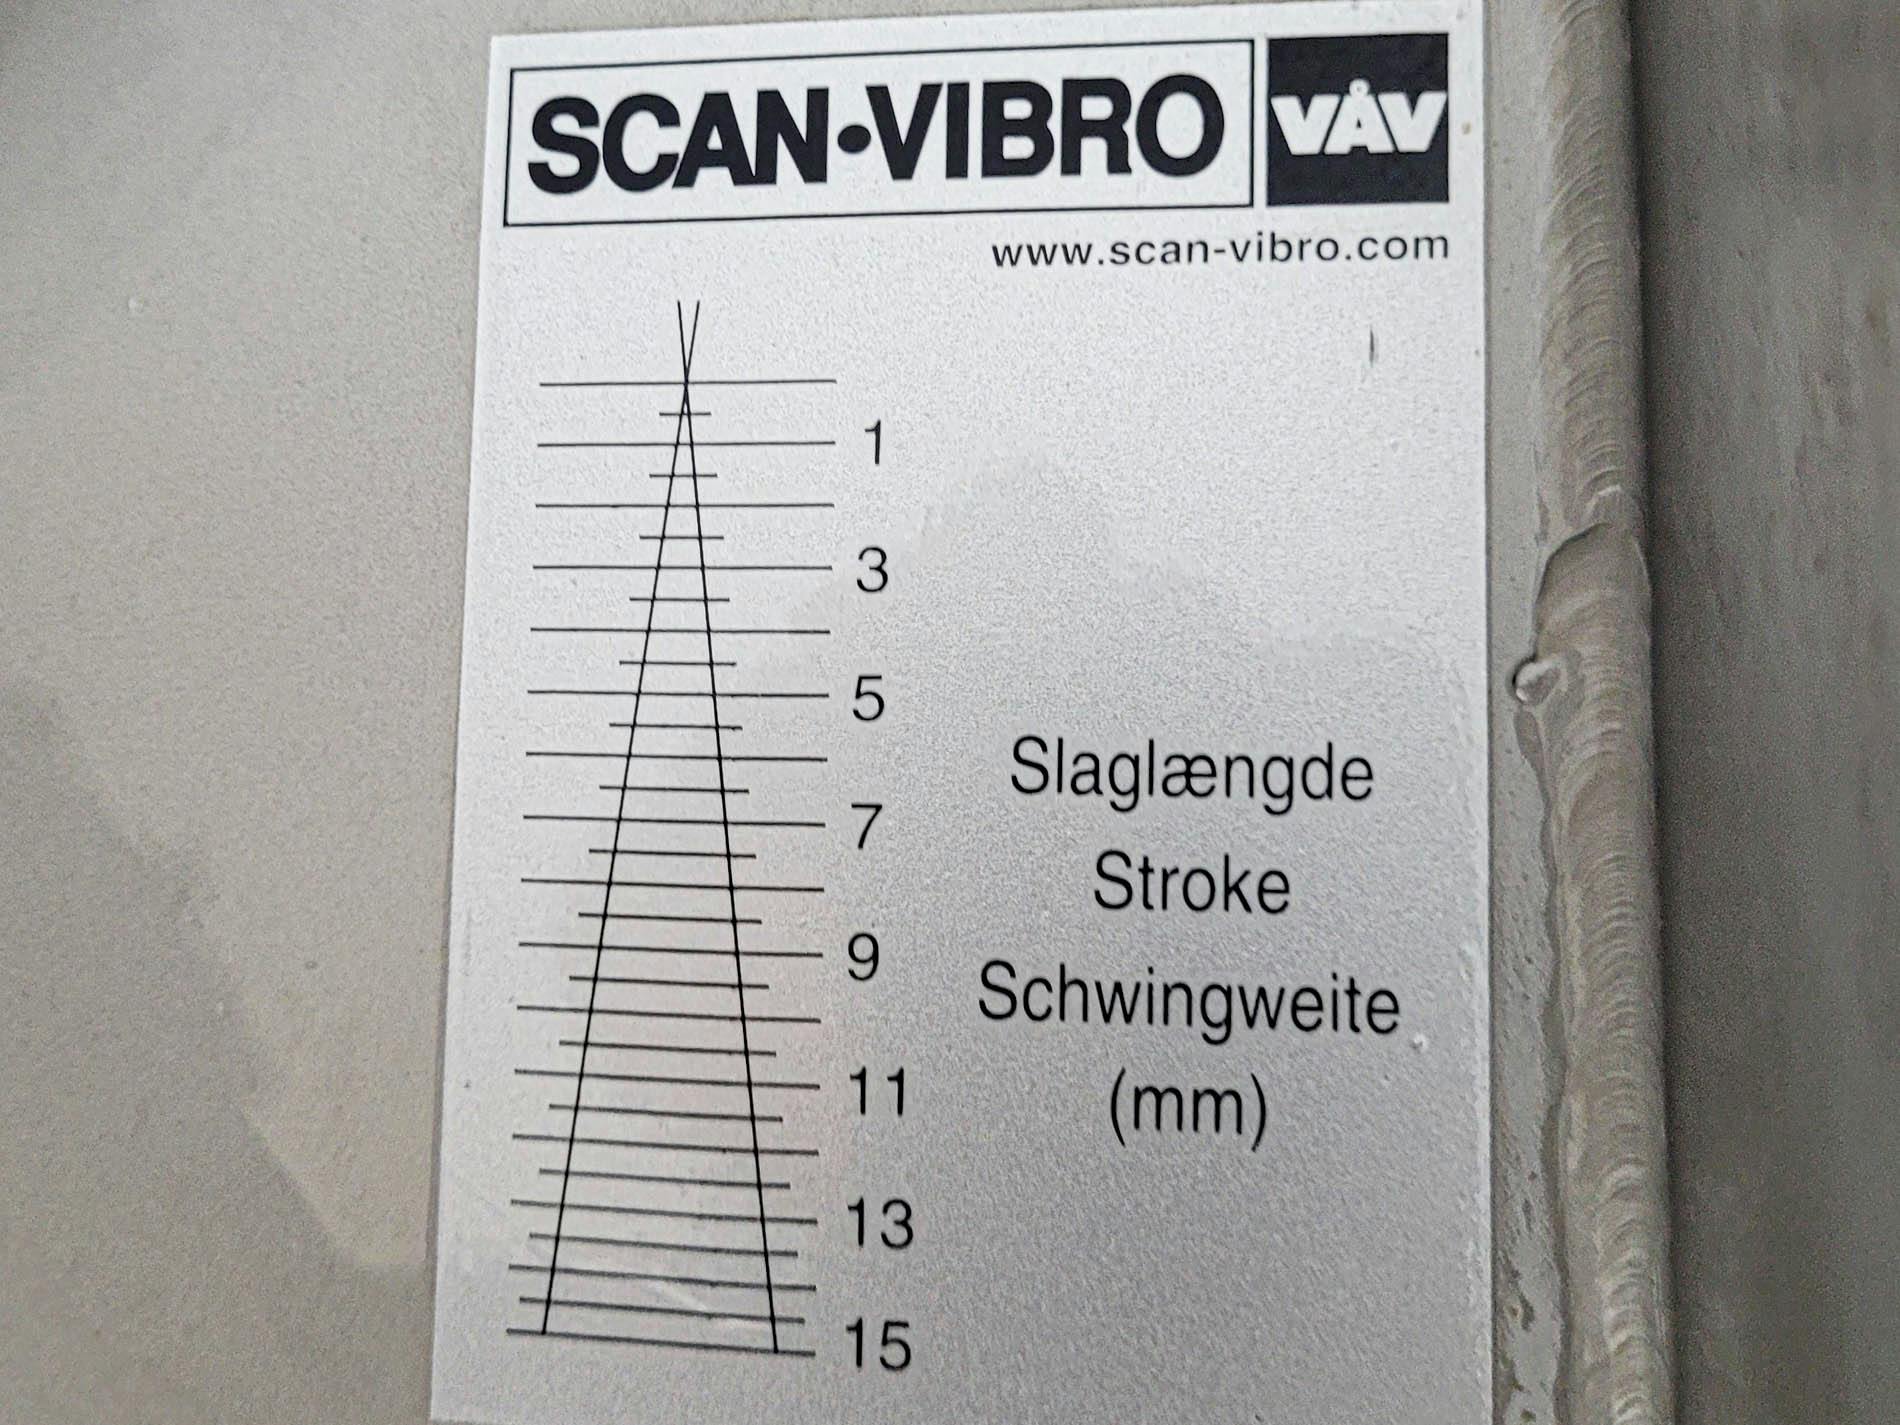 VAV Scan-Vibro TRS 300 x 1019 - Podajnik wibracyjny - image 10